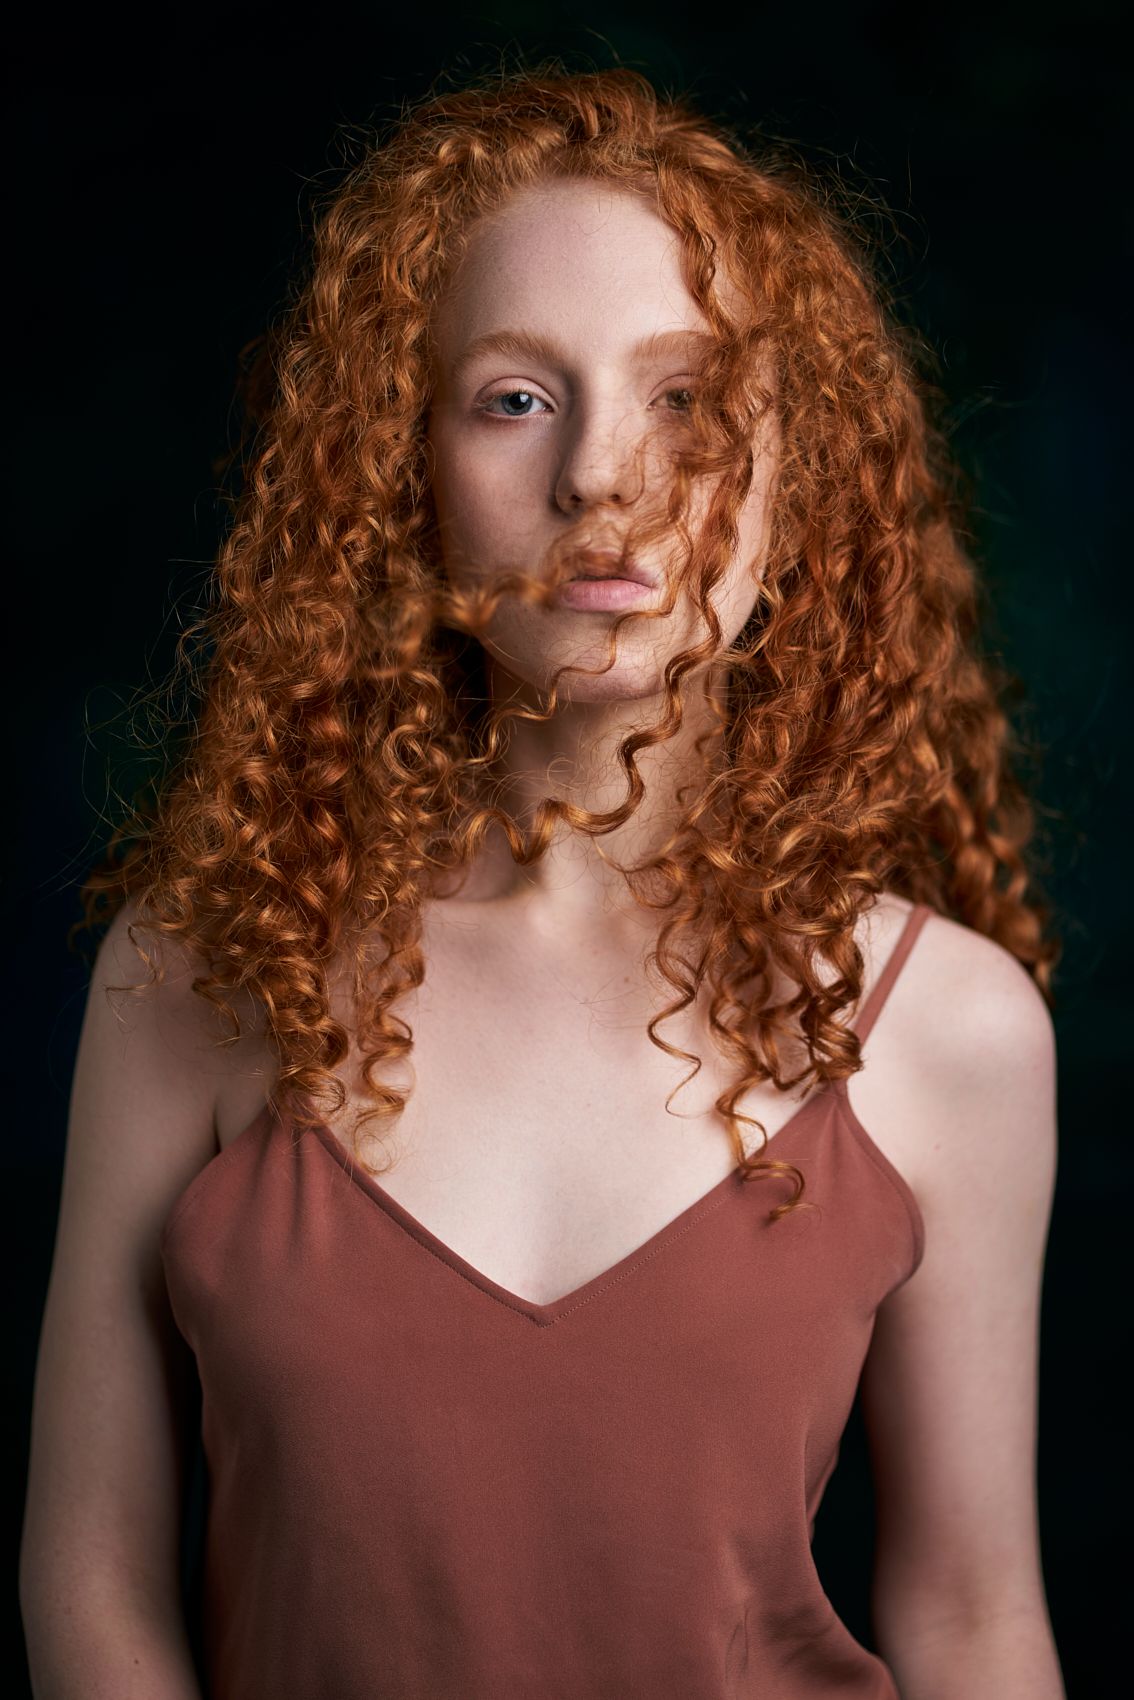 redhead, portrait, studio, low key, sony, girl, Наташа Высоцкая